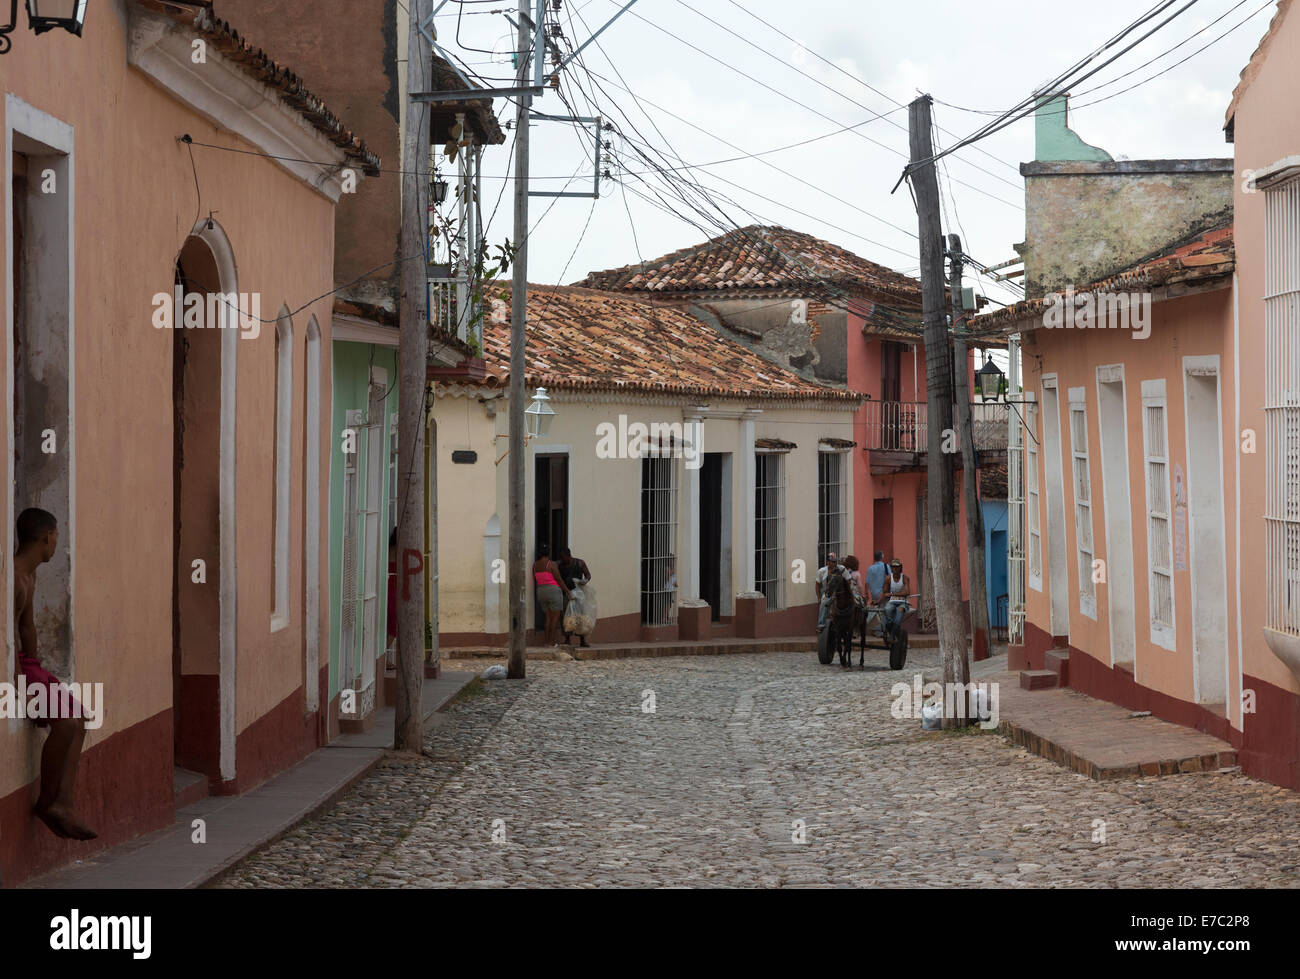 Straßenszene, Trinidad, Kuba Stockfoto